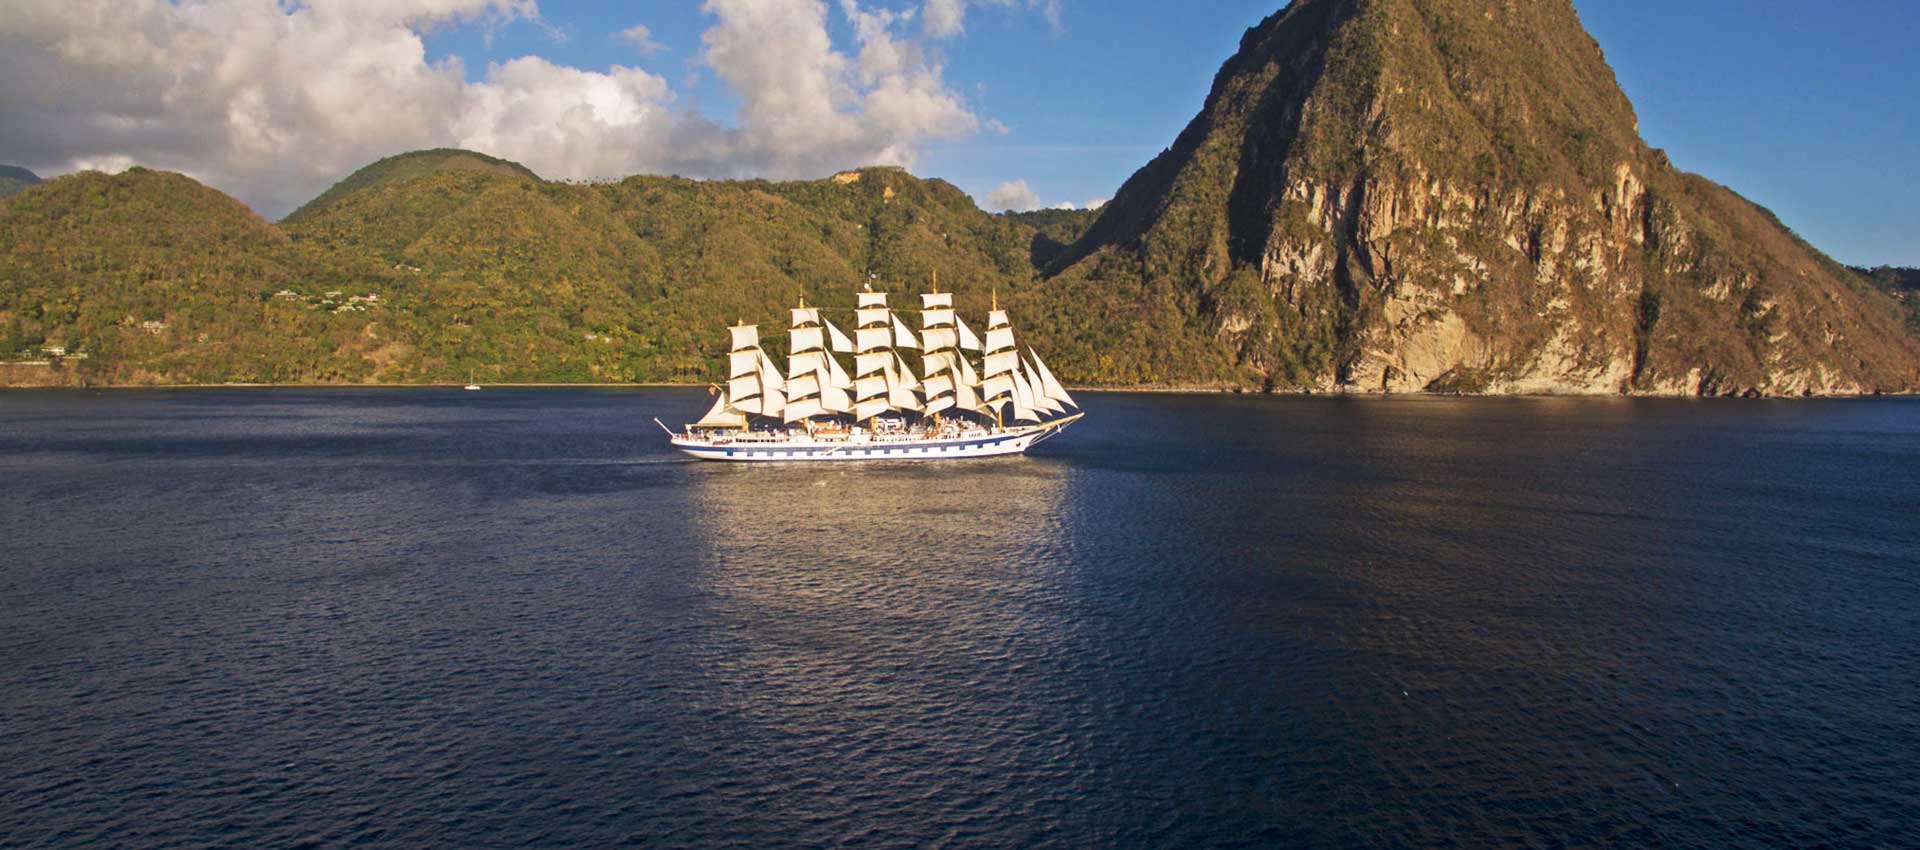 Sailing ship cruise: Barbados and Antigua, Caribbean